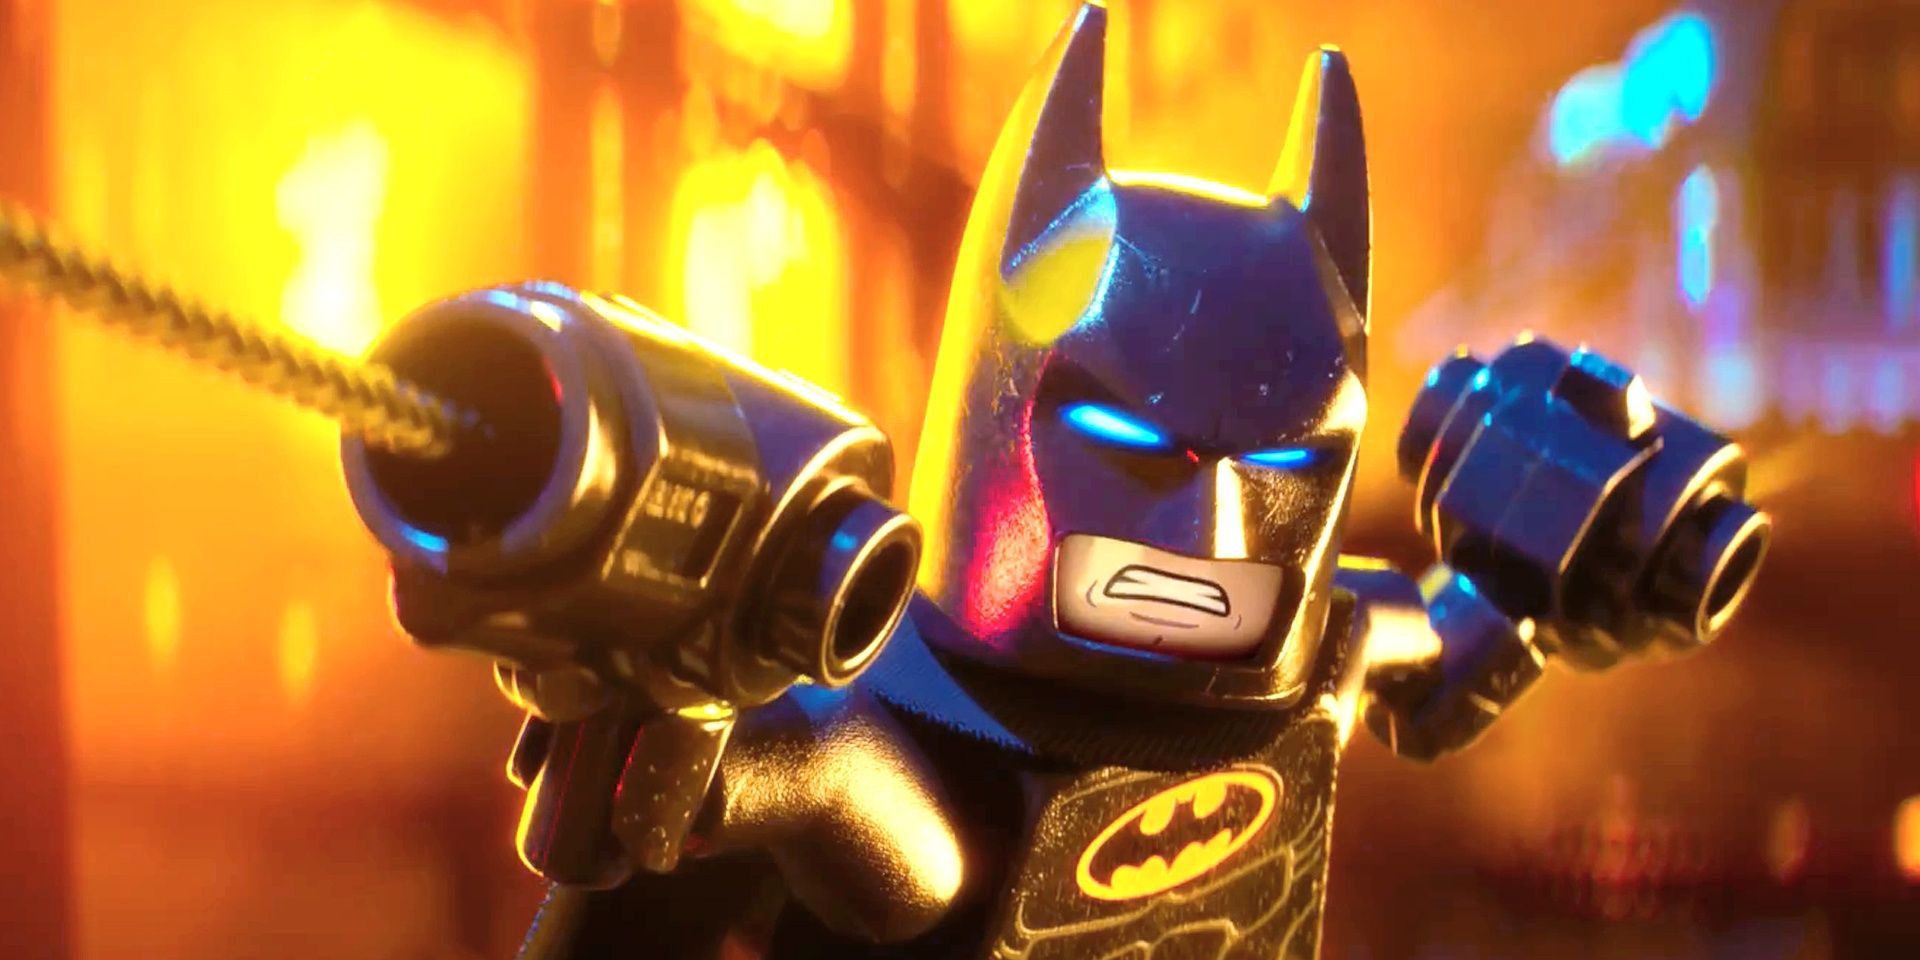 Lego Batman uses his grapple gun